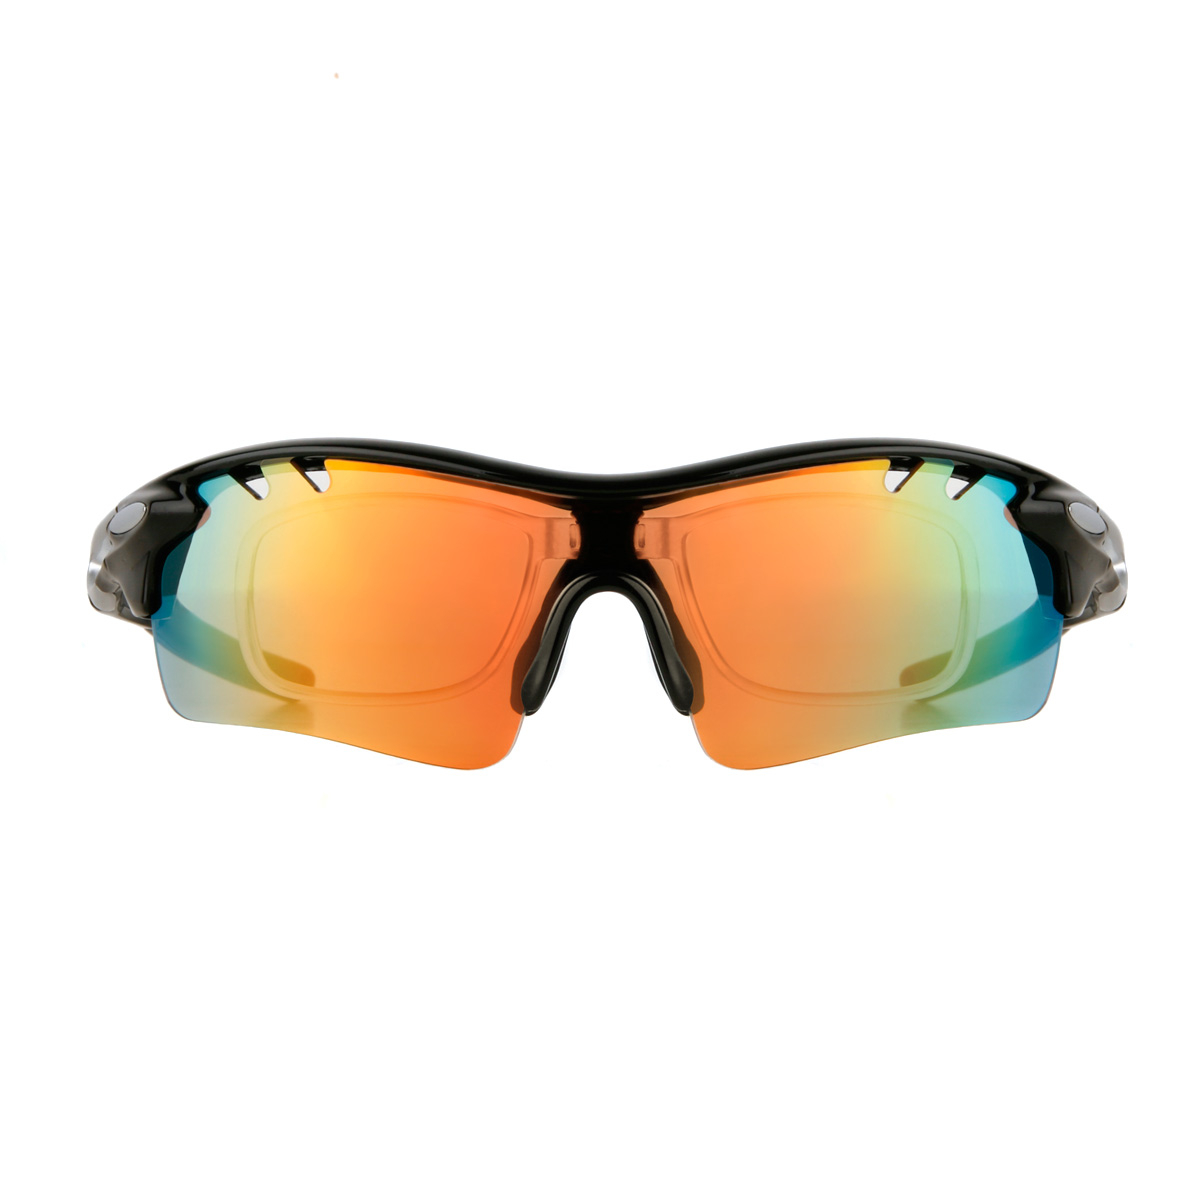 NEW Tour Gear Gloss Black Interchangeable Golf/Sports Sunglasses w/5 Lenses - image 2 of 5